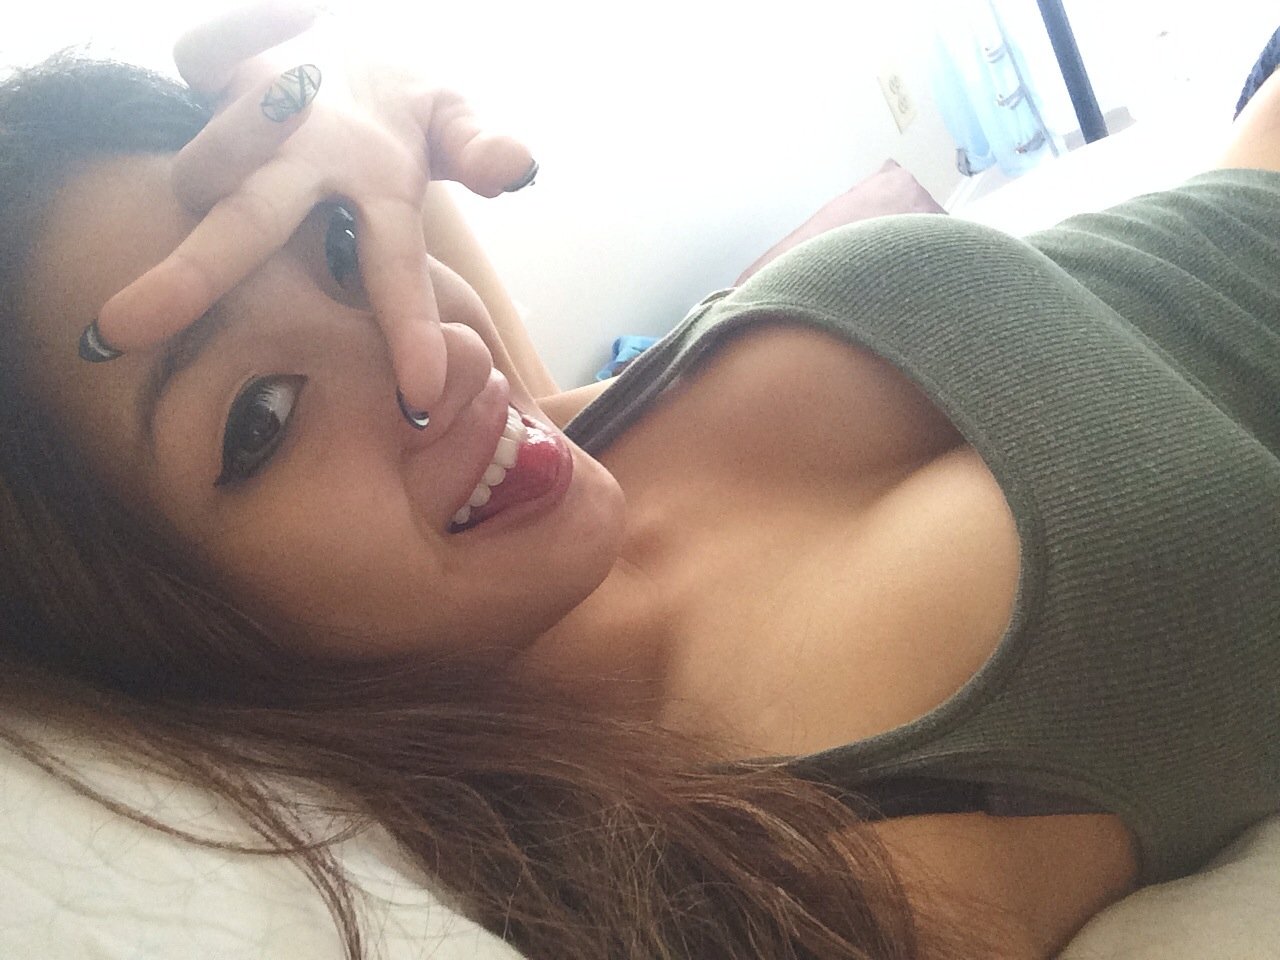 14vyearbold asian girl selfie